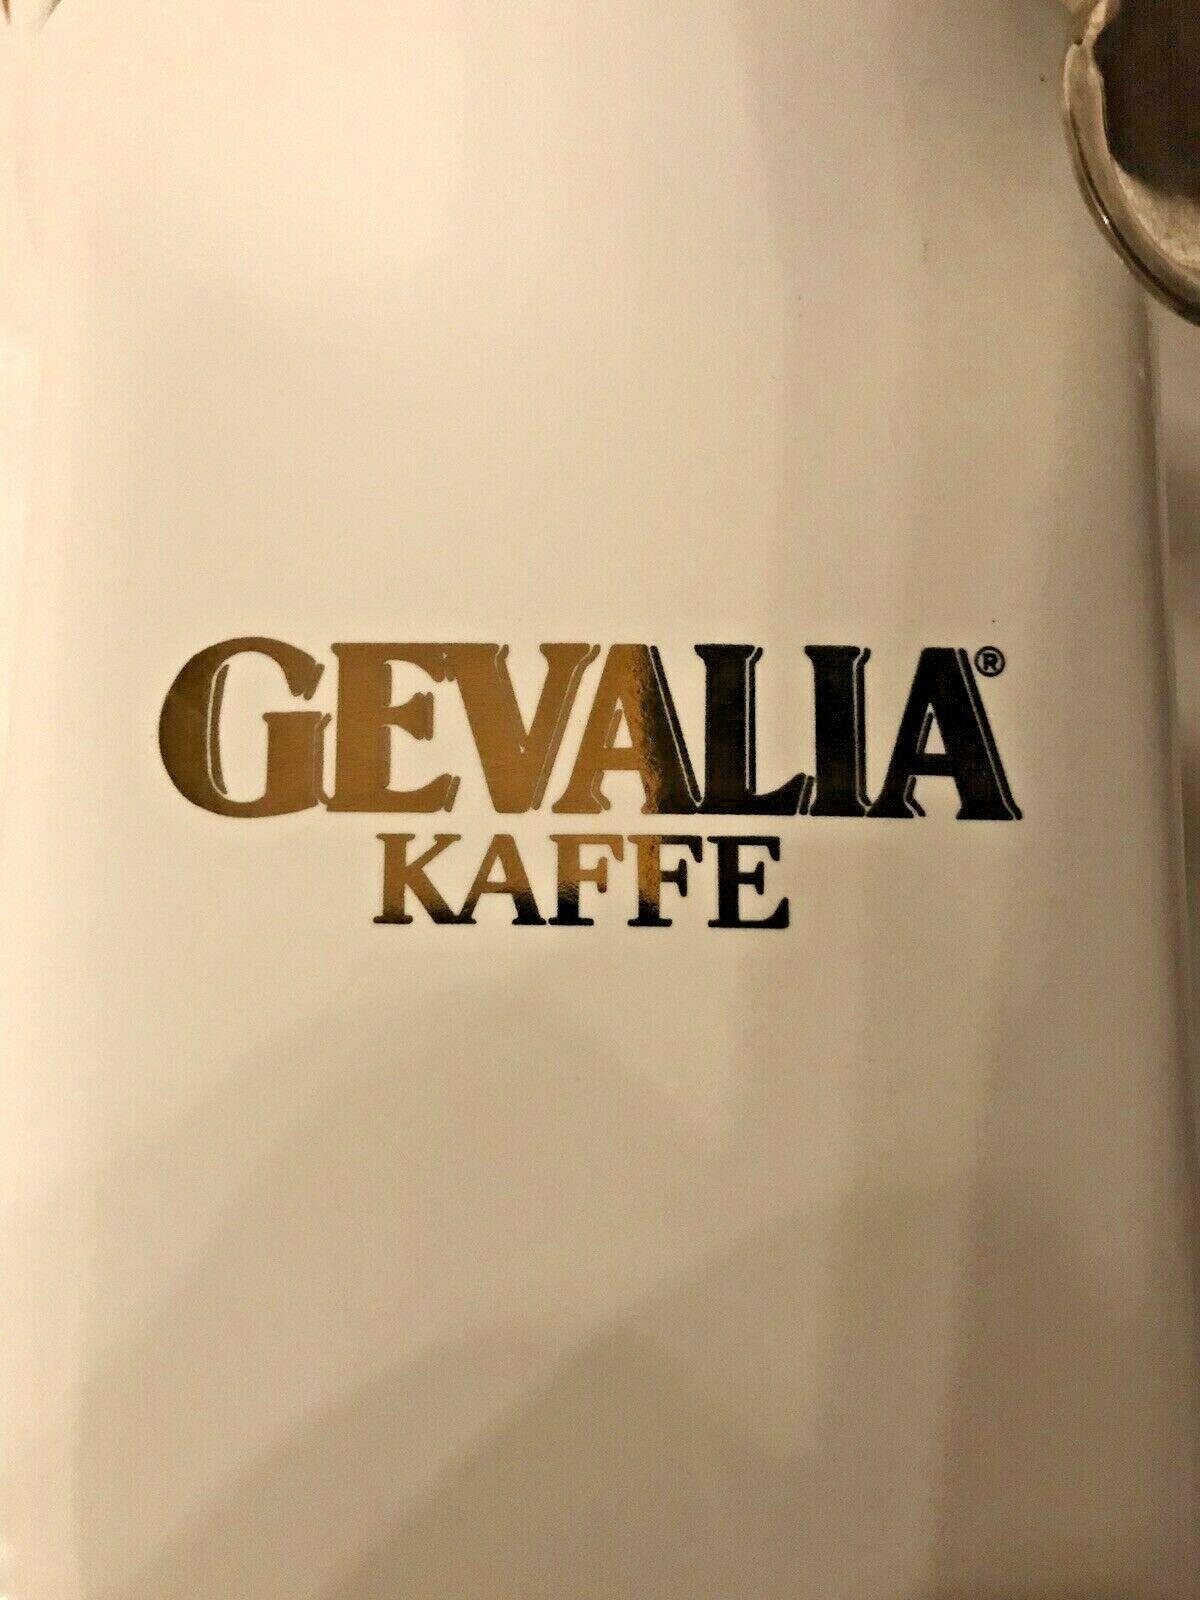 Gevalia Logo - GEVALIA KAFFE Coffee White Sweden Storage Container CANISTER Tight